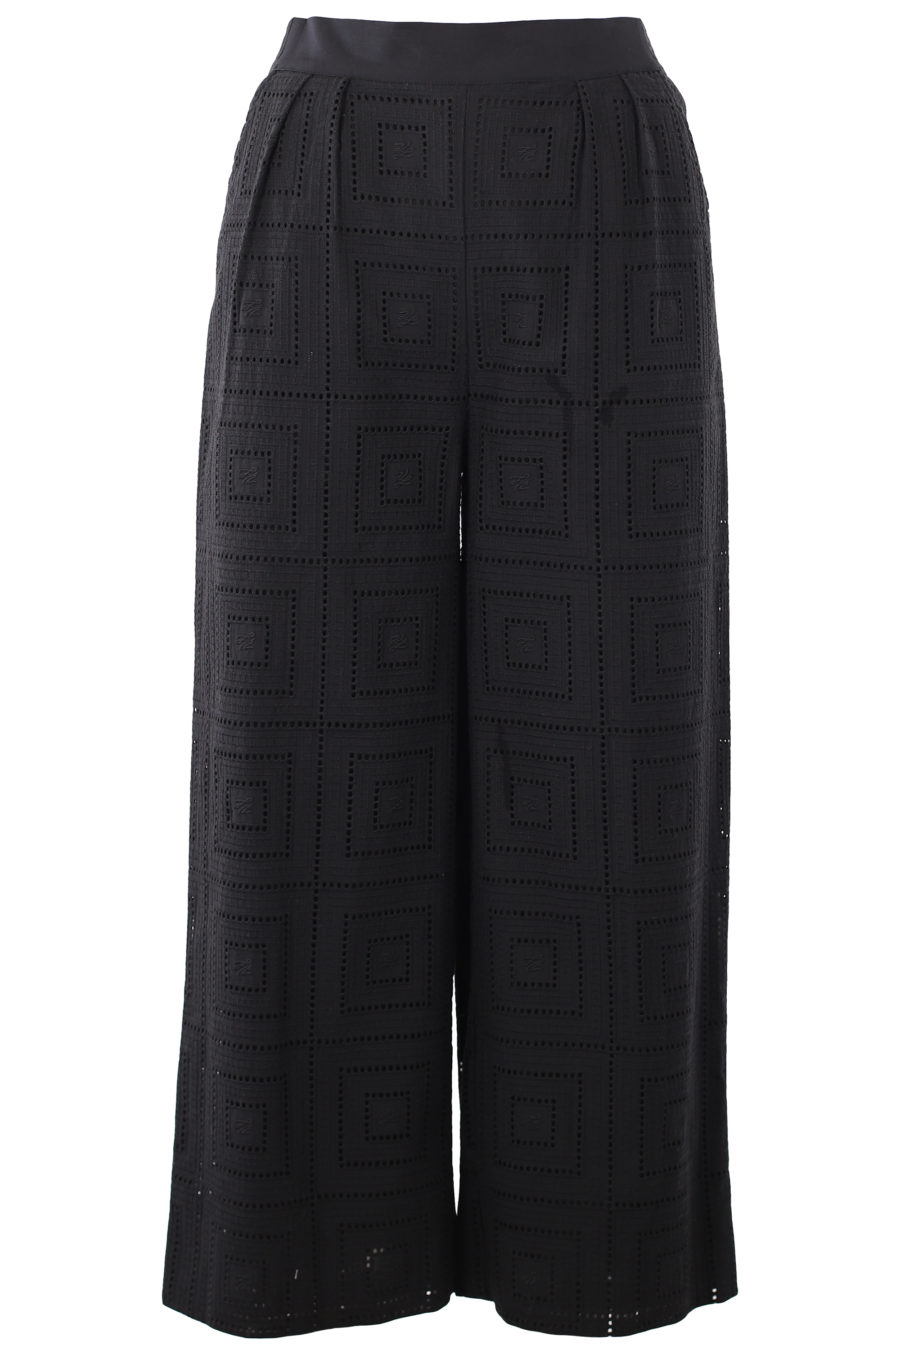 Pantalon brodé noir - IMG 1345